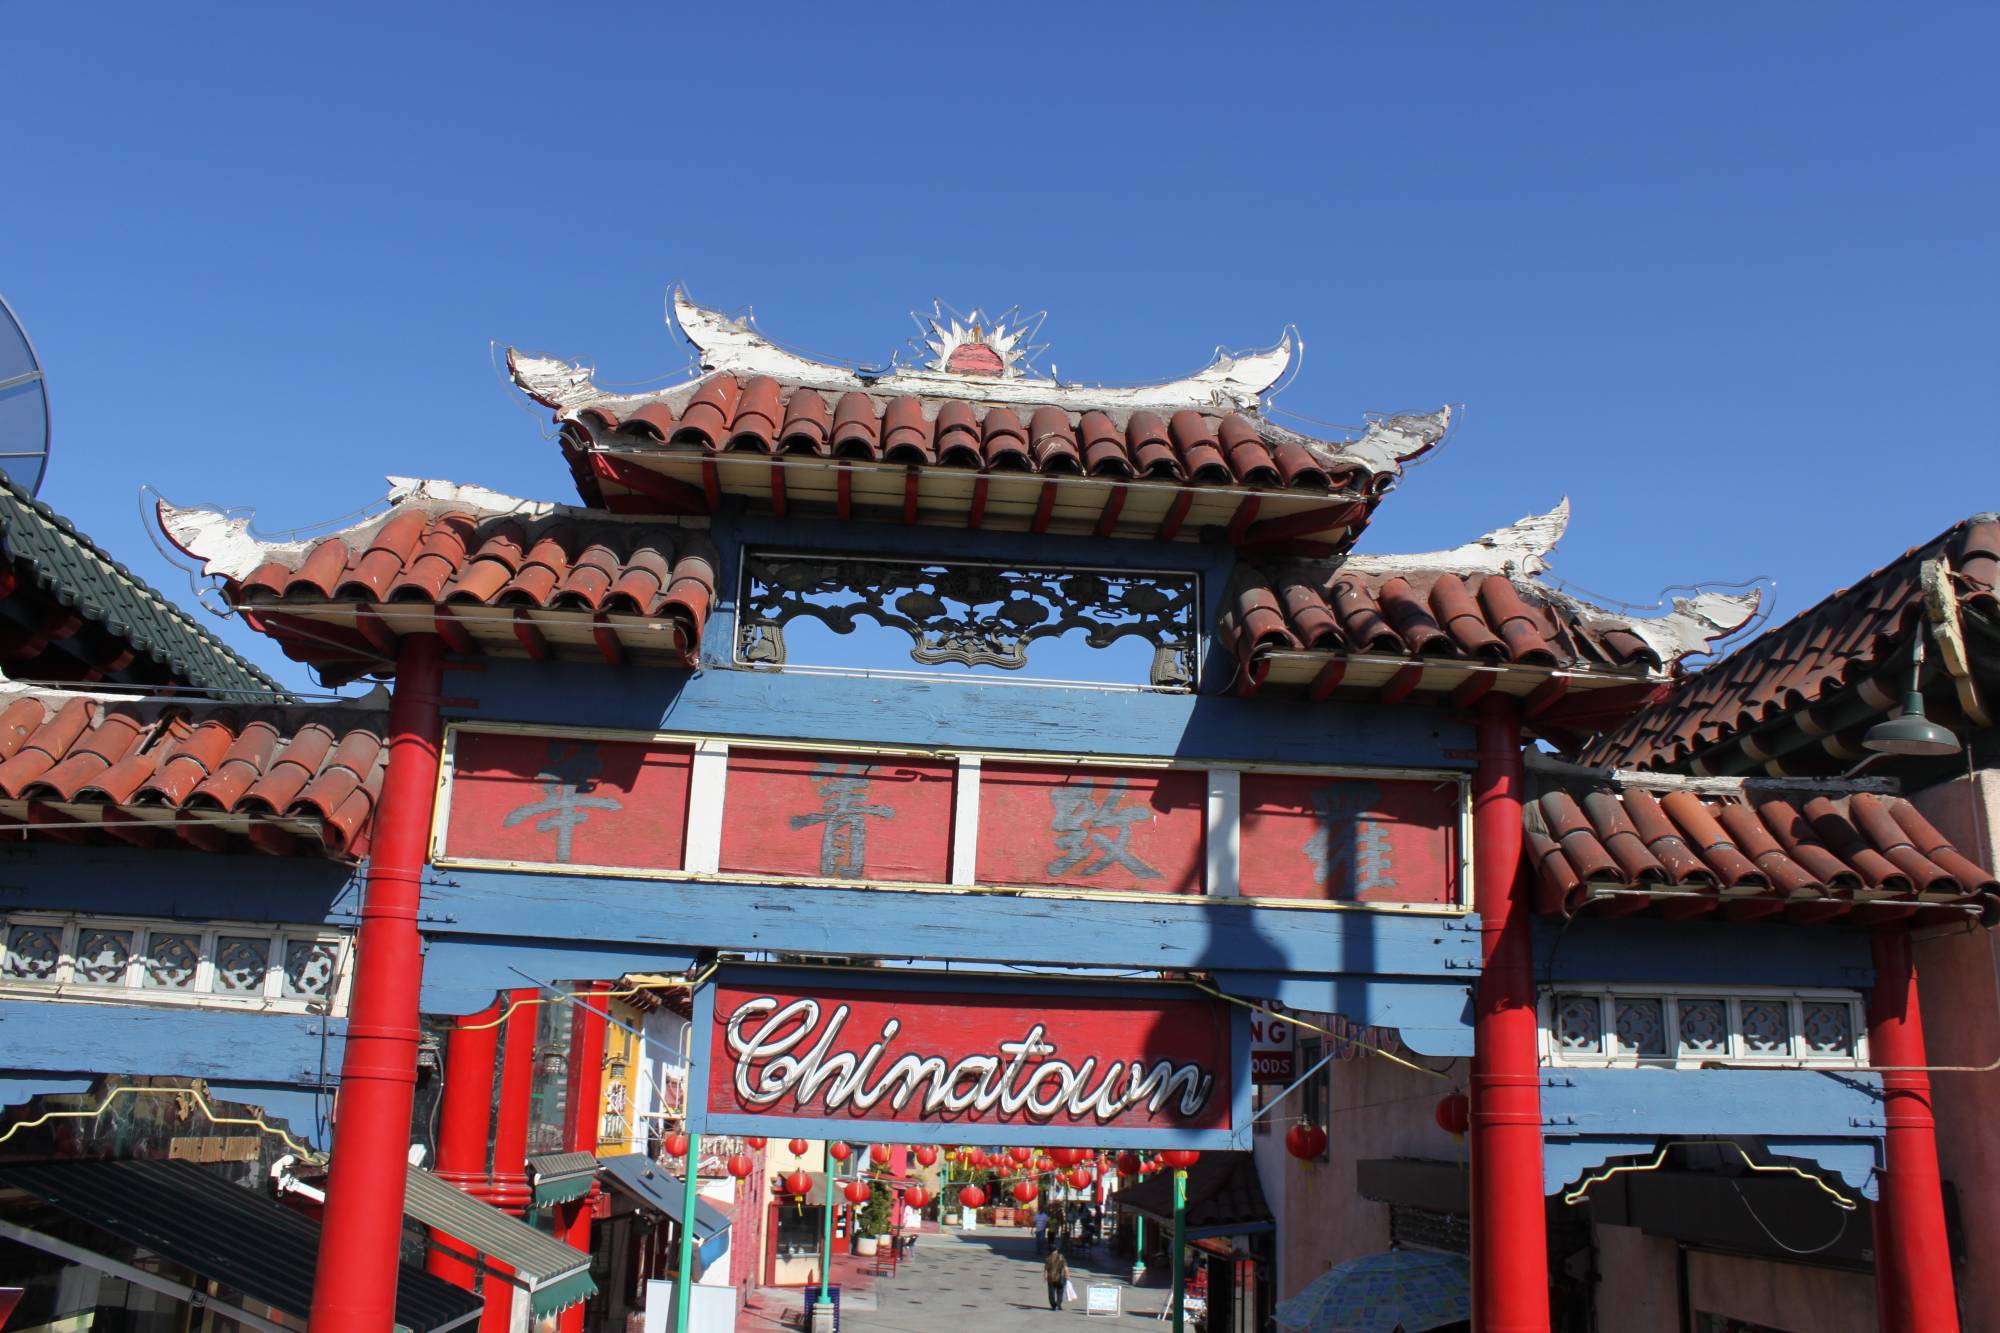 Los Angeles' Chinatown